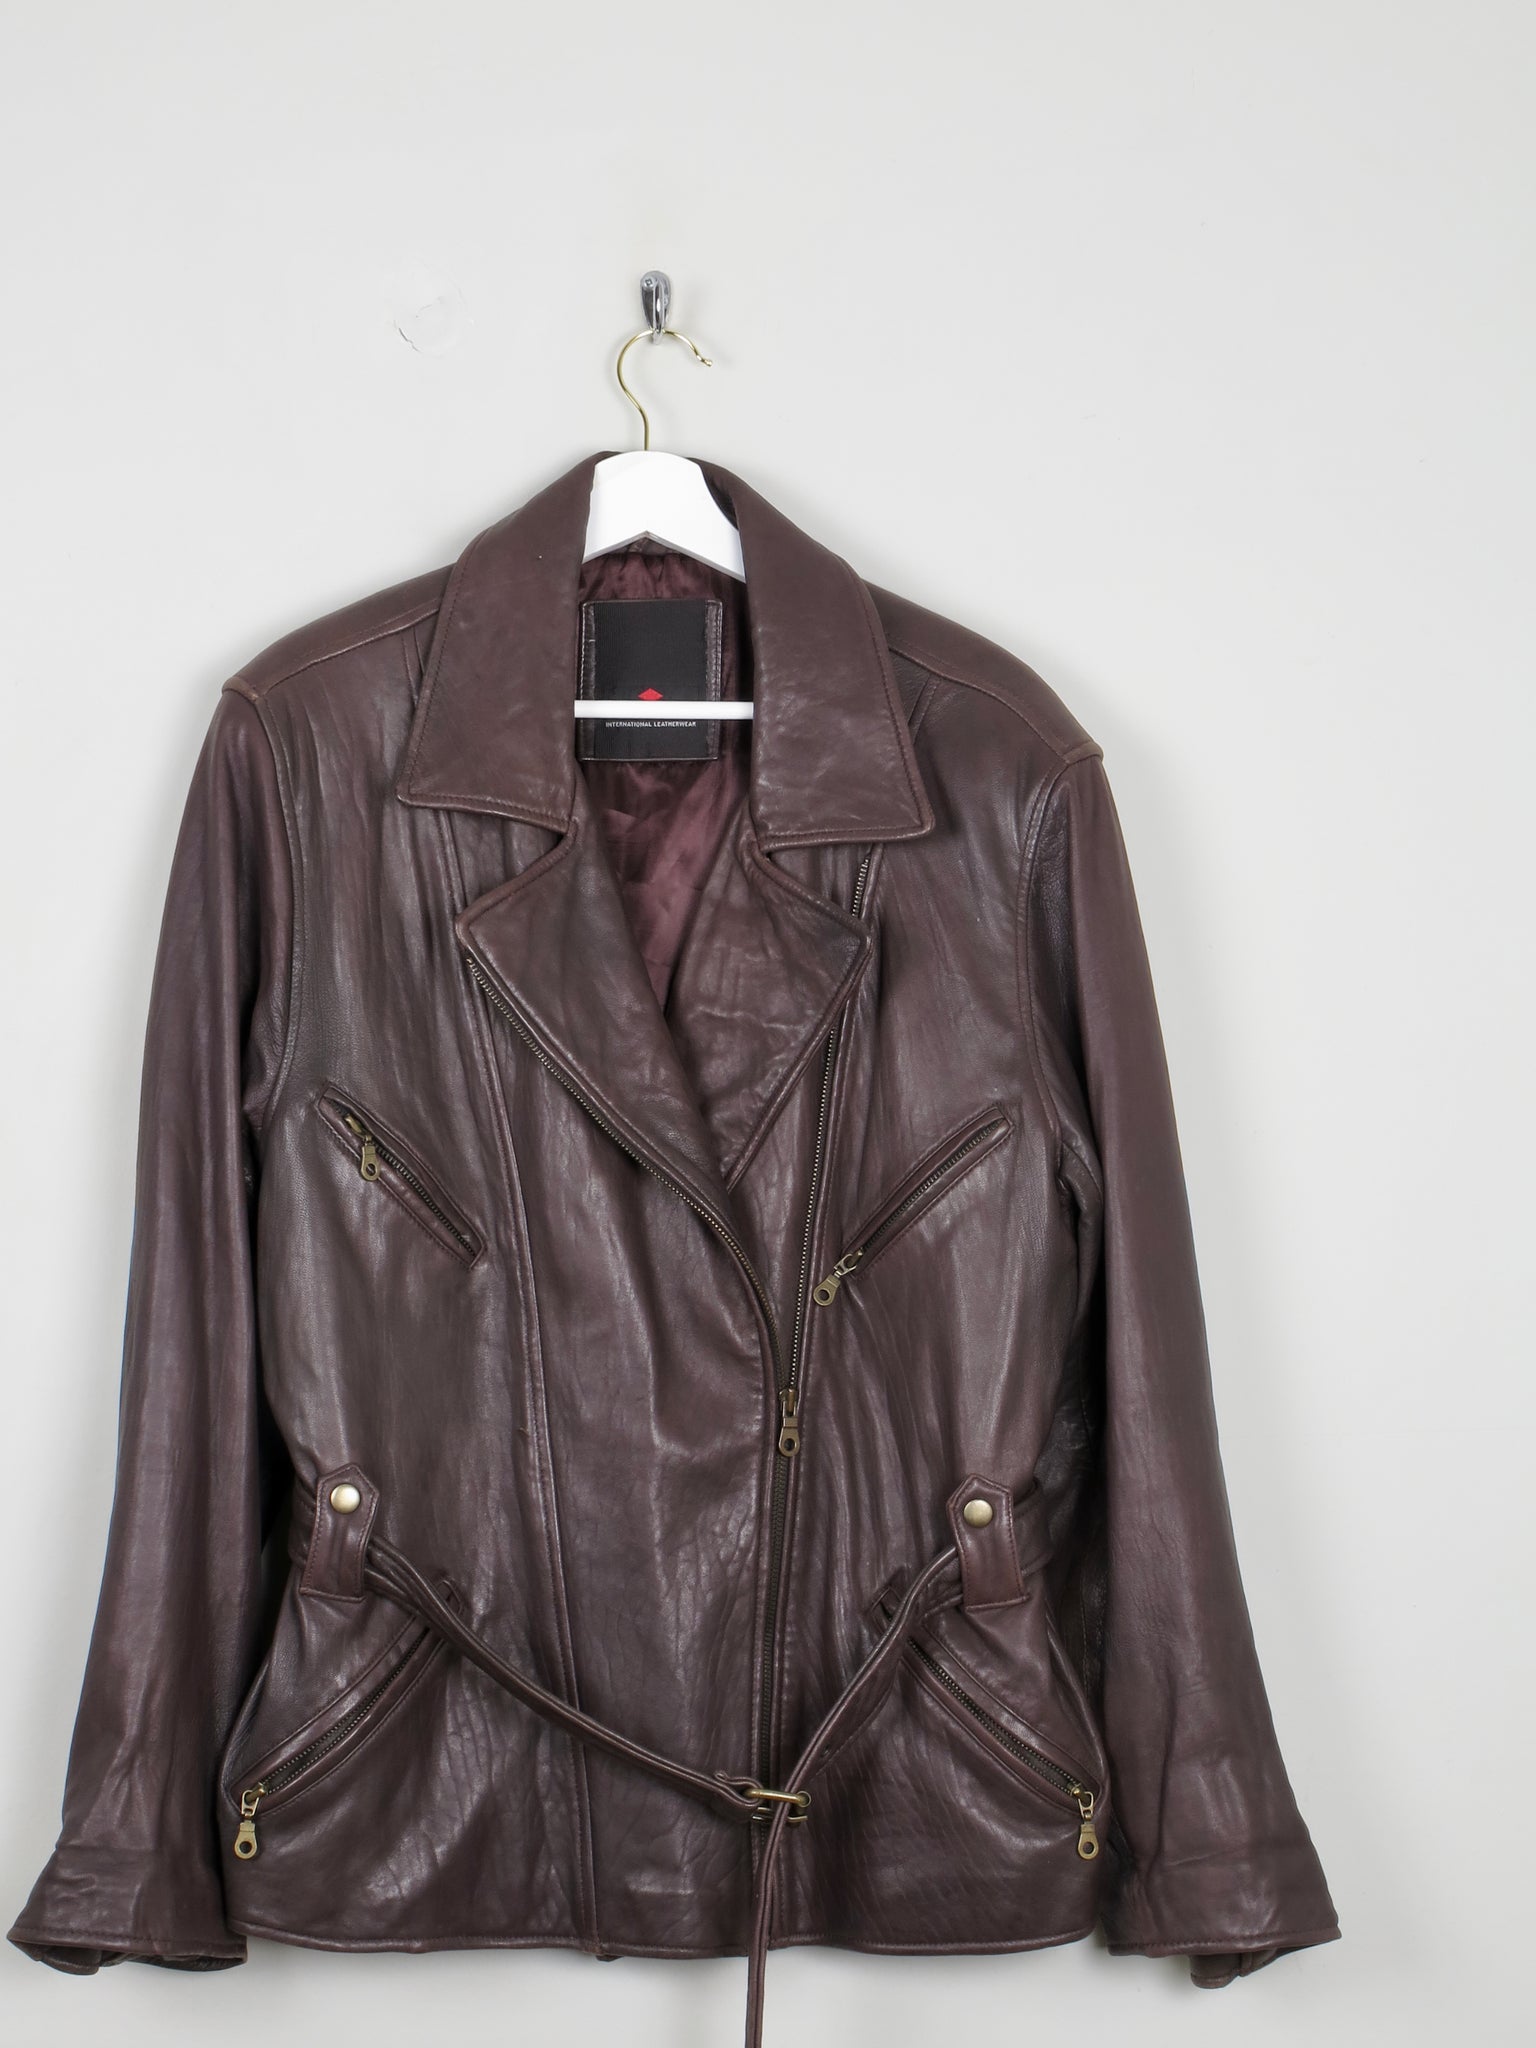 Women's Brown/Wine Vintage Biker Style Leather Jacket M Oversized - The Harlequin